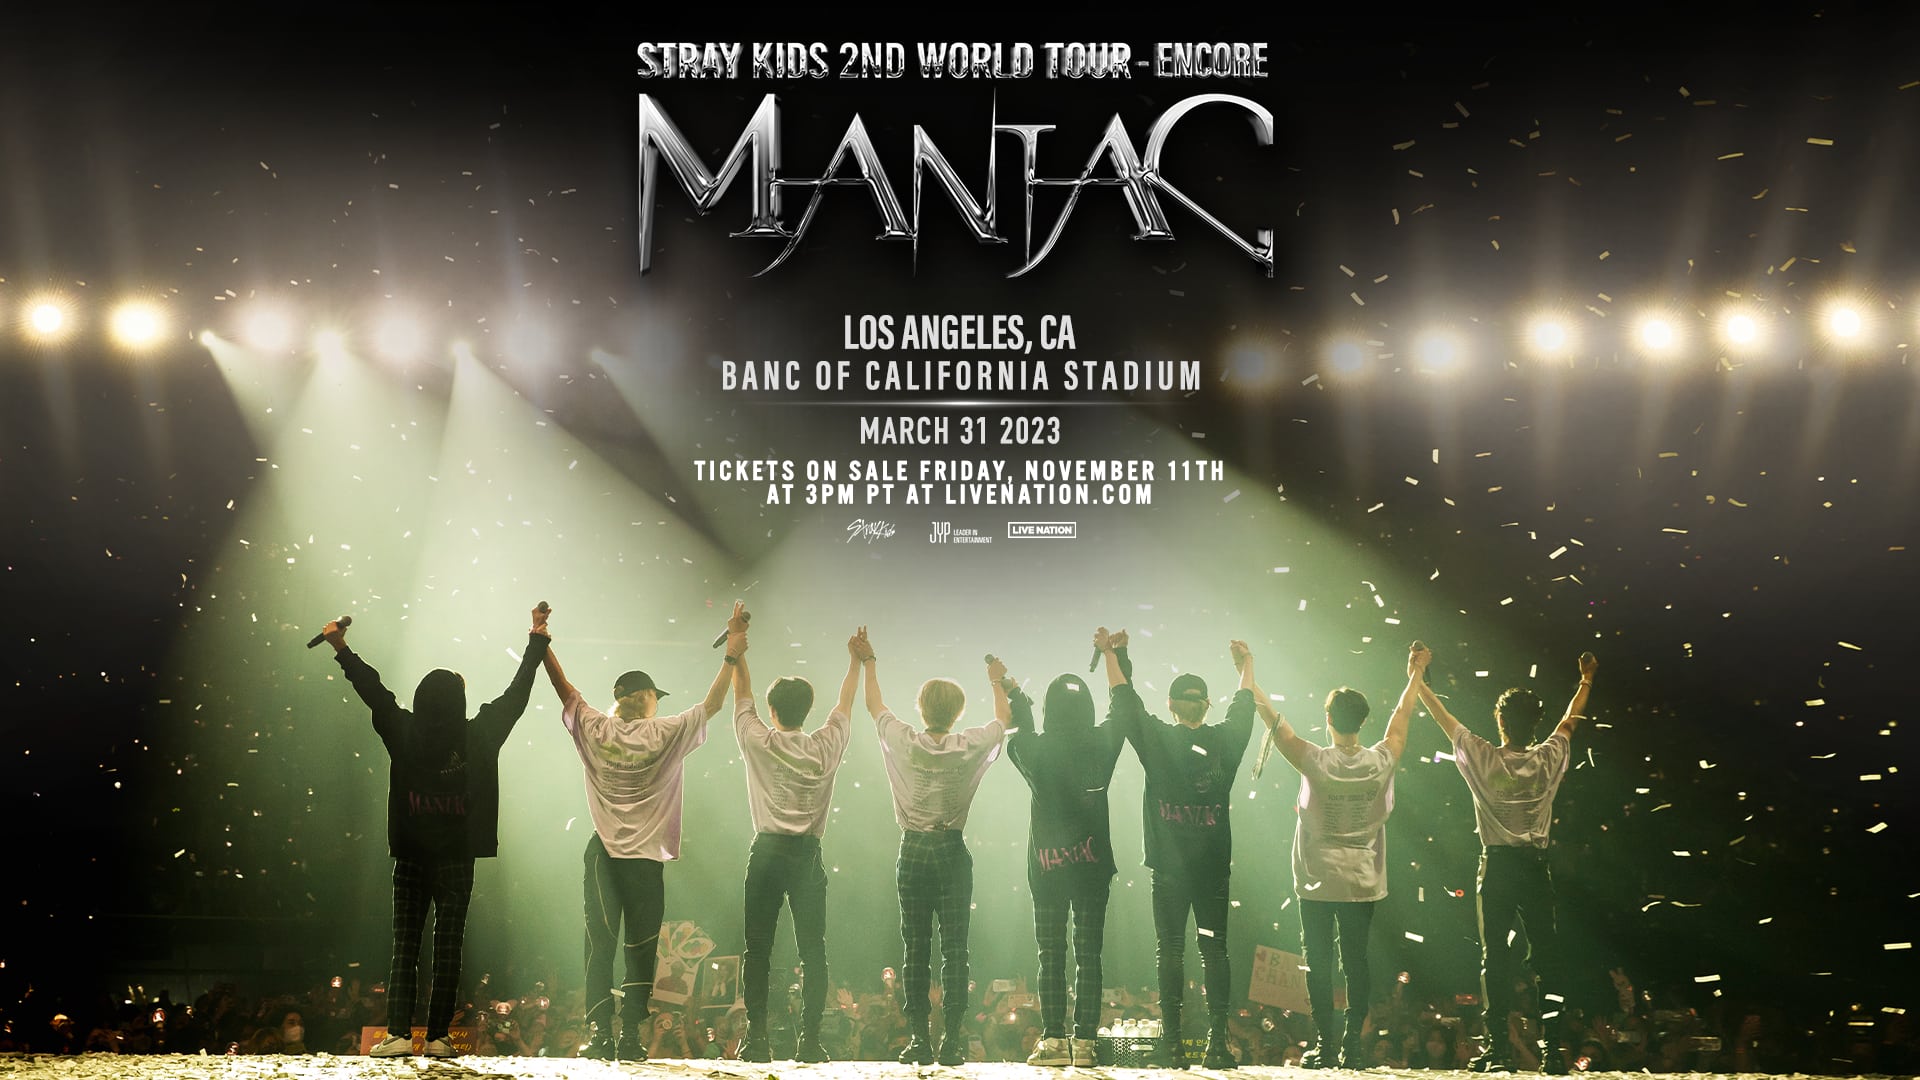 KPOP STARS STRAY KIDS ANNOUNCE 2ND WORLD TOUR “MANIAC” ENCORE